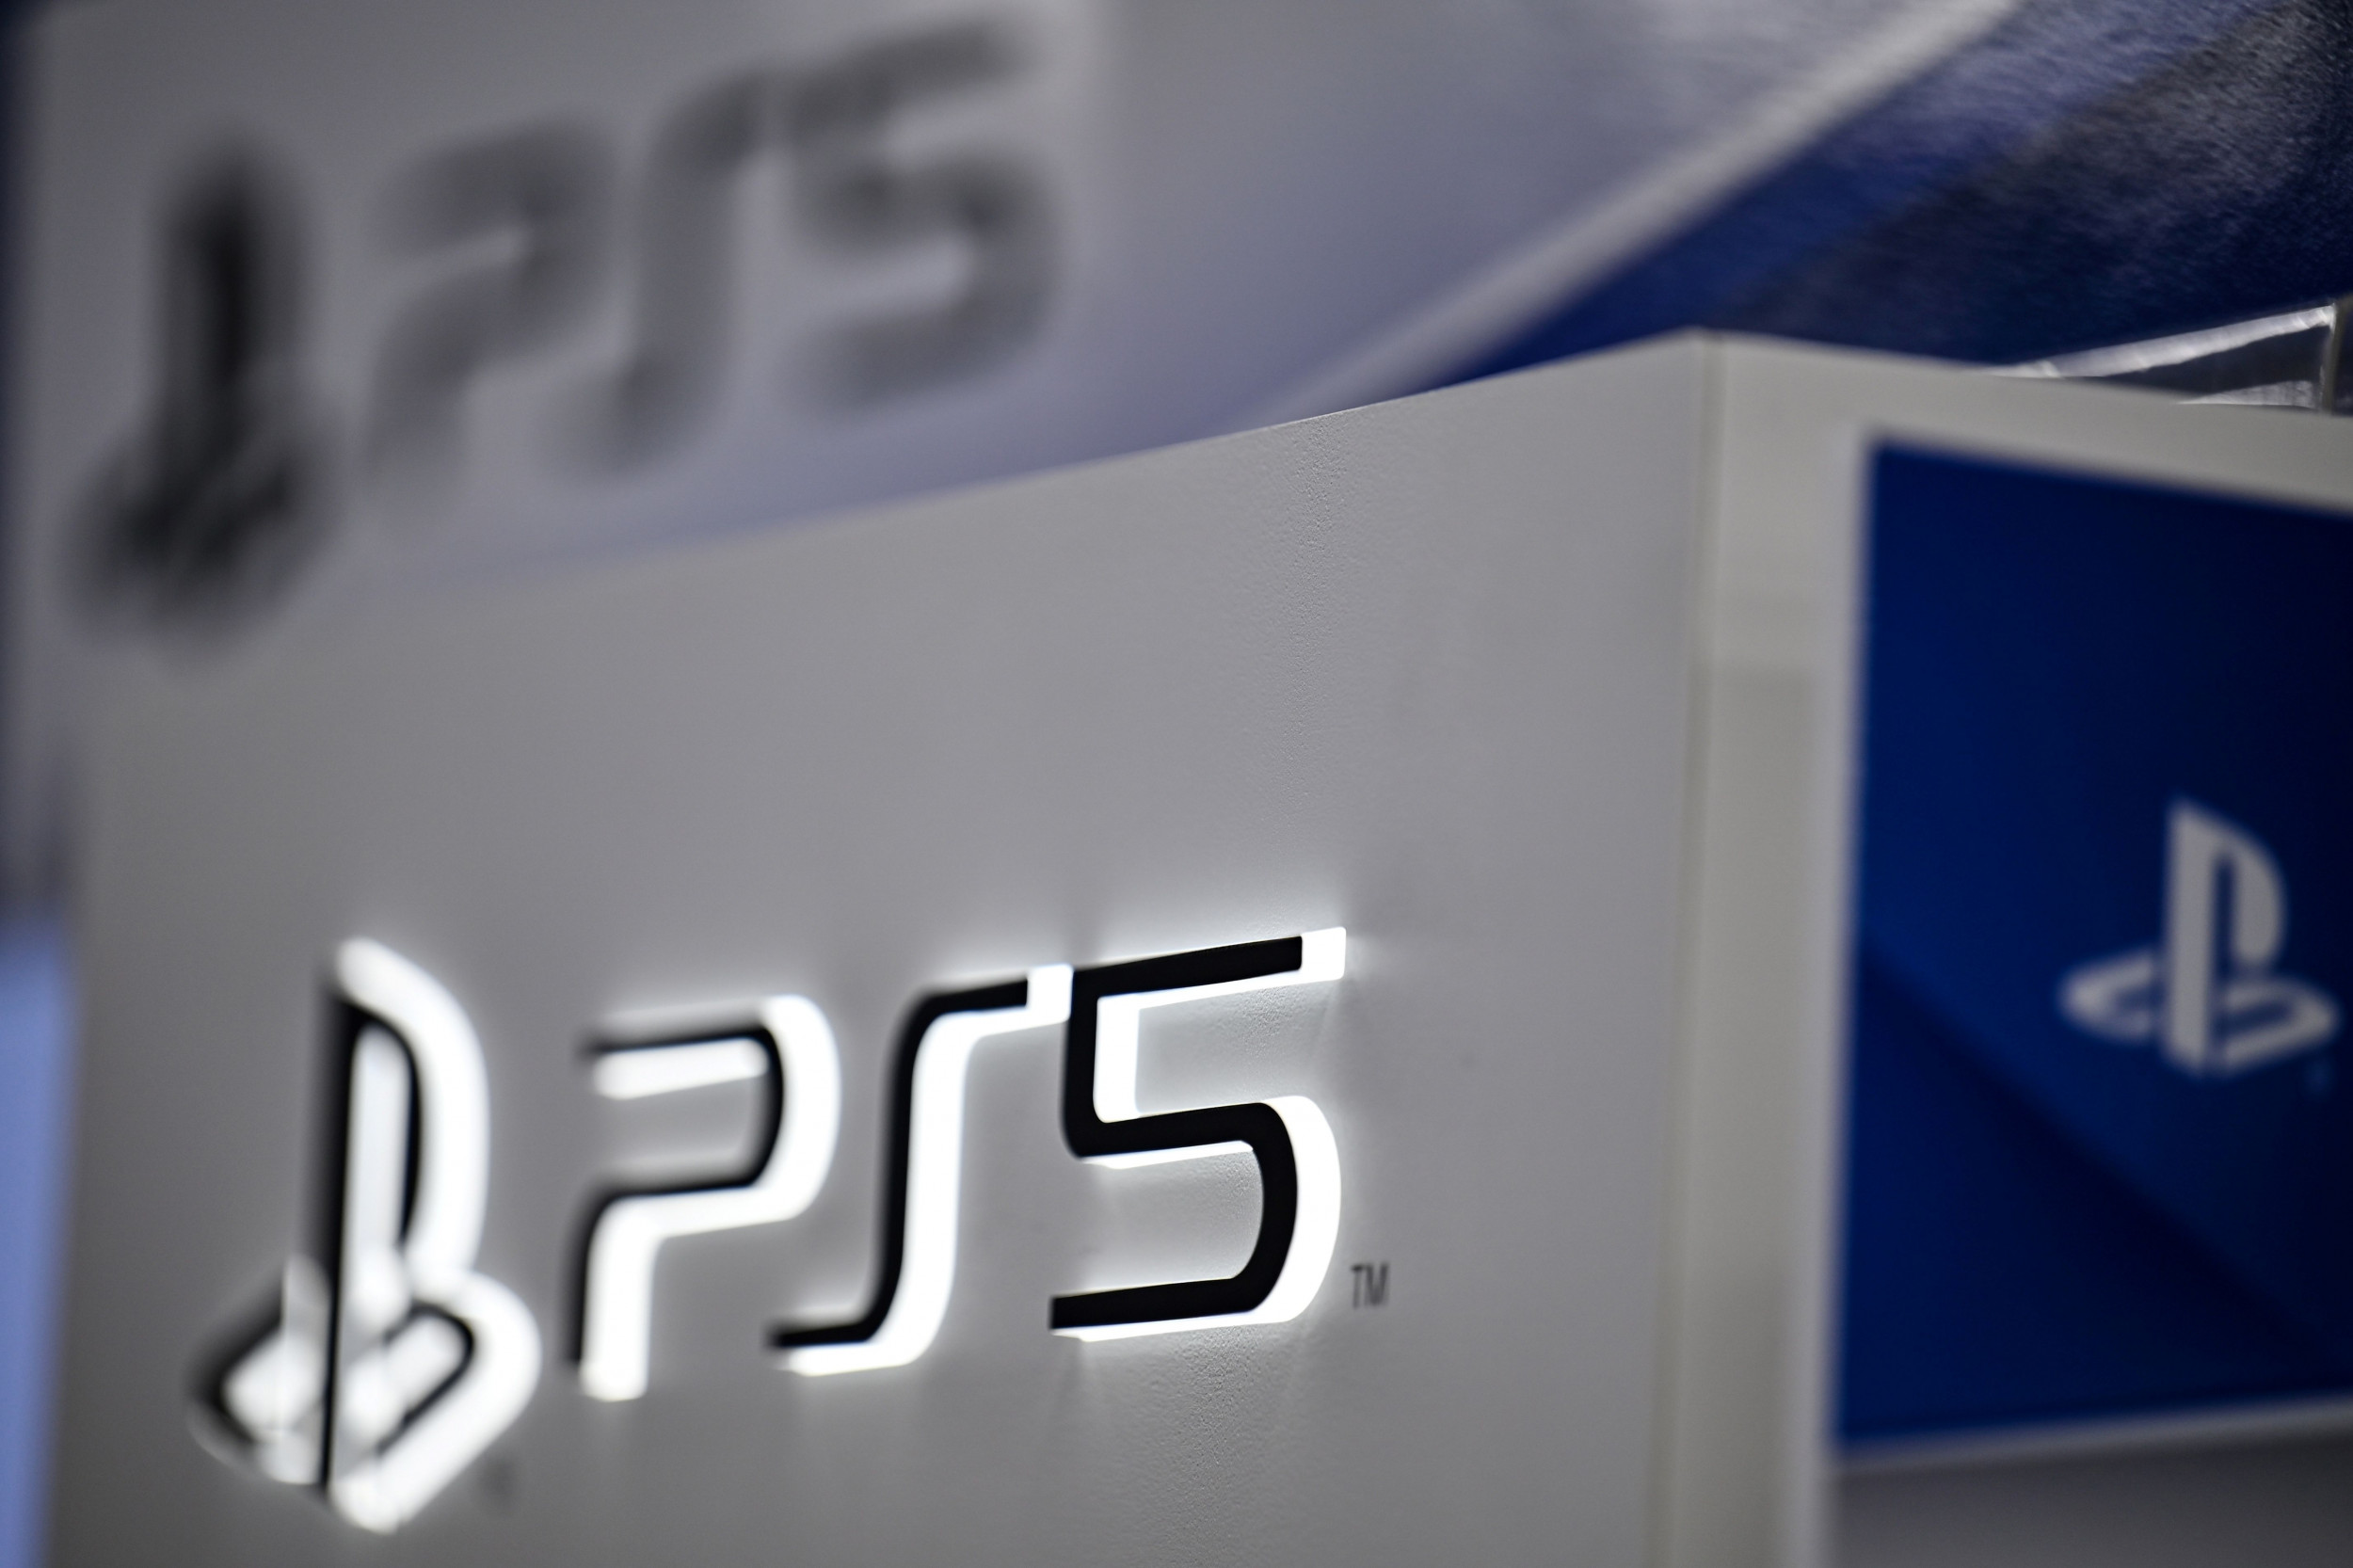 PS5 Restock Update for Target, Antonline, Walmart, Sony Rewards, GameFly and more